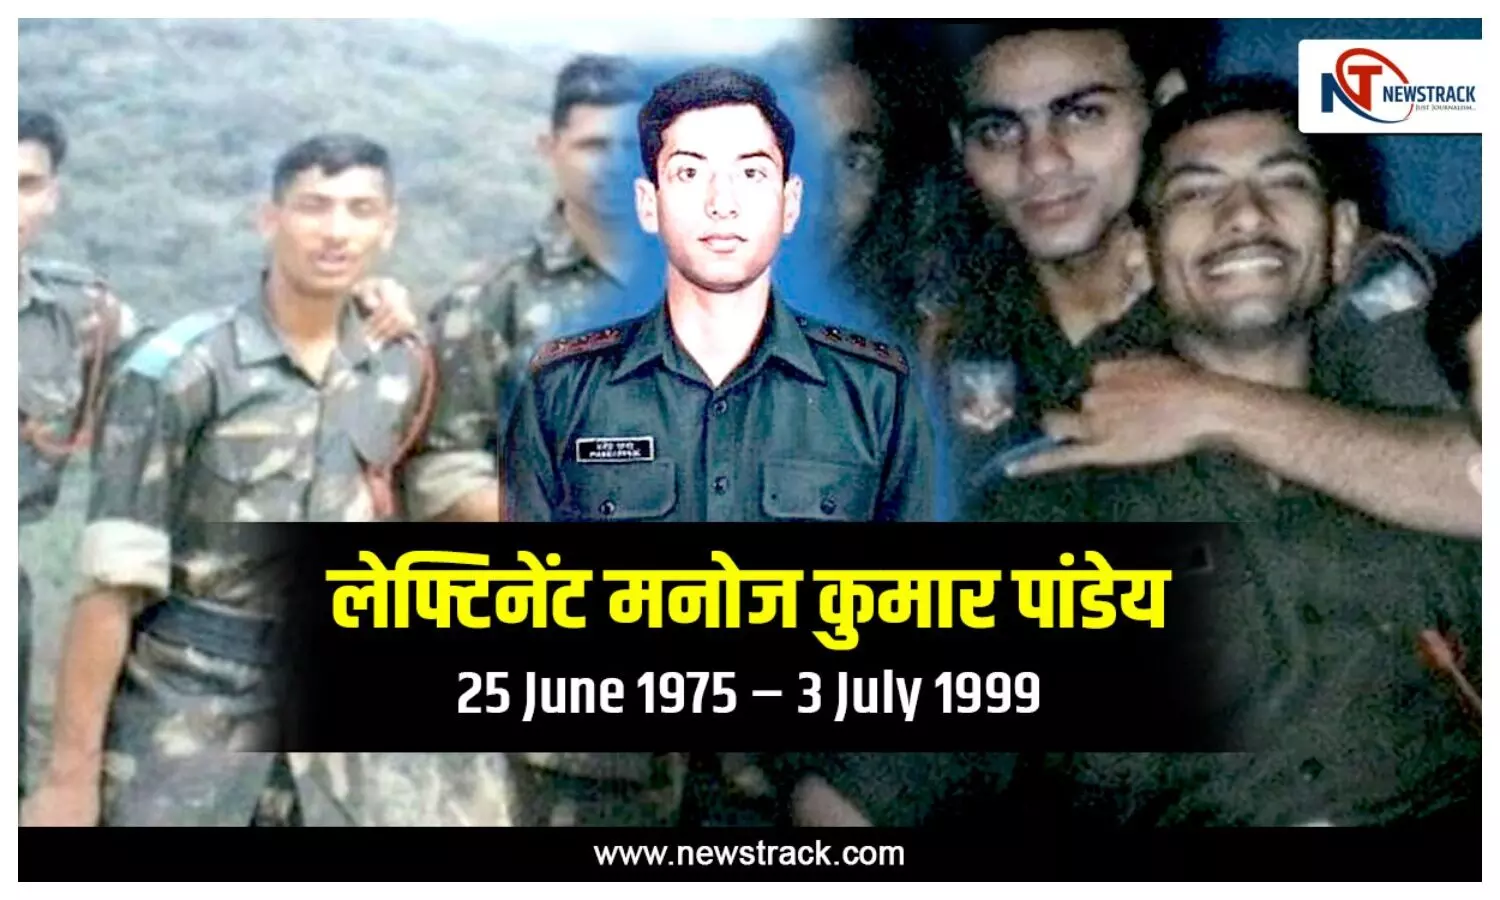 Kargil war hero Lt Manoj Kumar Pandey